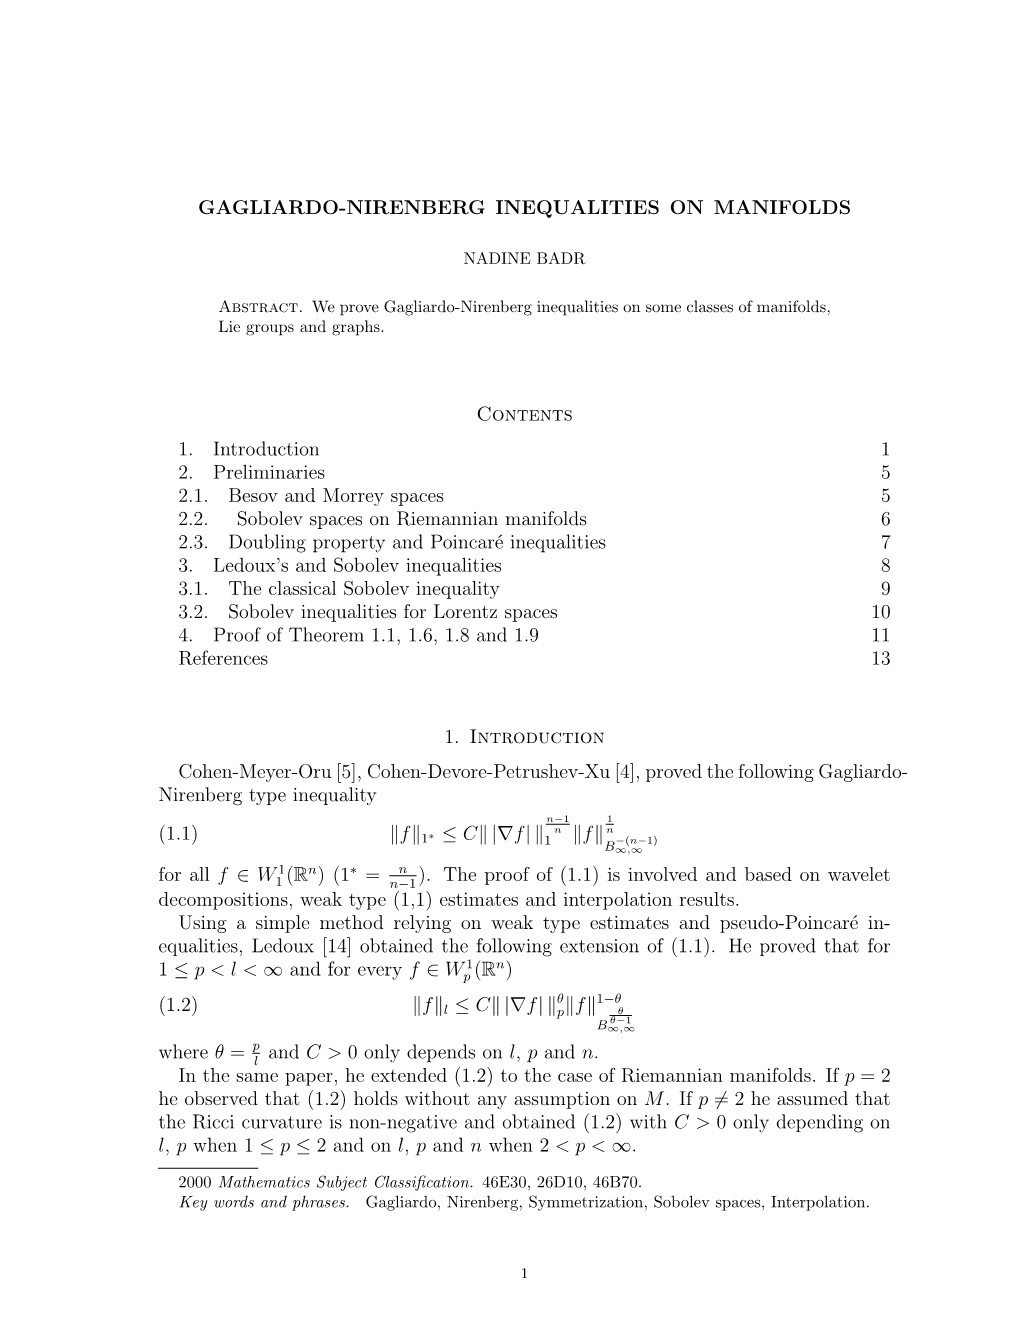 Gagliardo-Nirenberg Inequalities on Manifolds